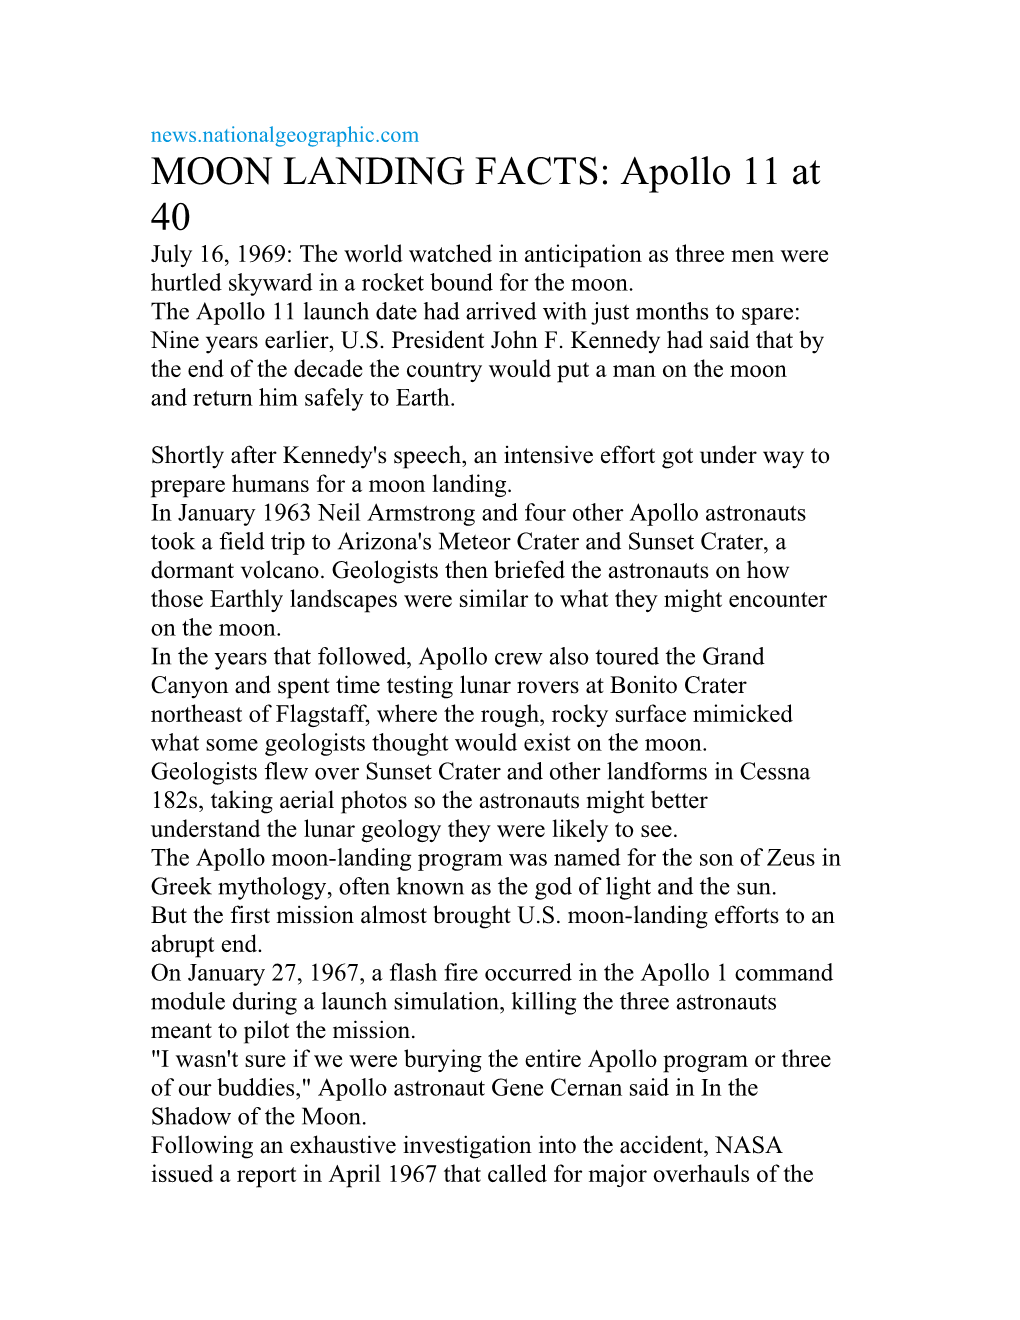 MOON LANDING FACTS: Apollo 11 At